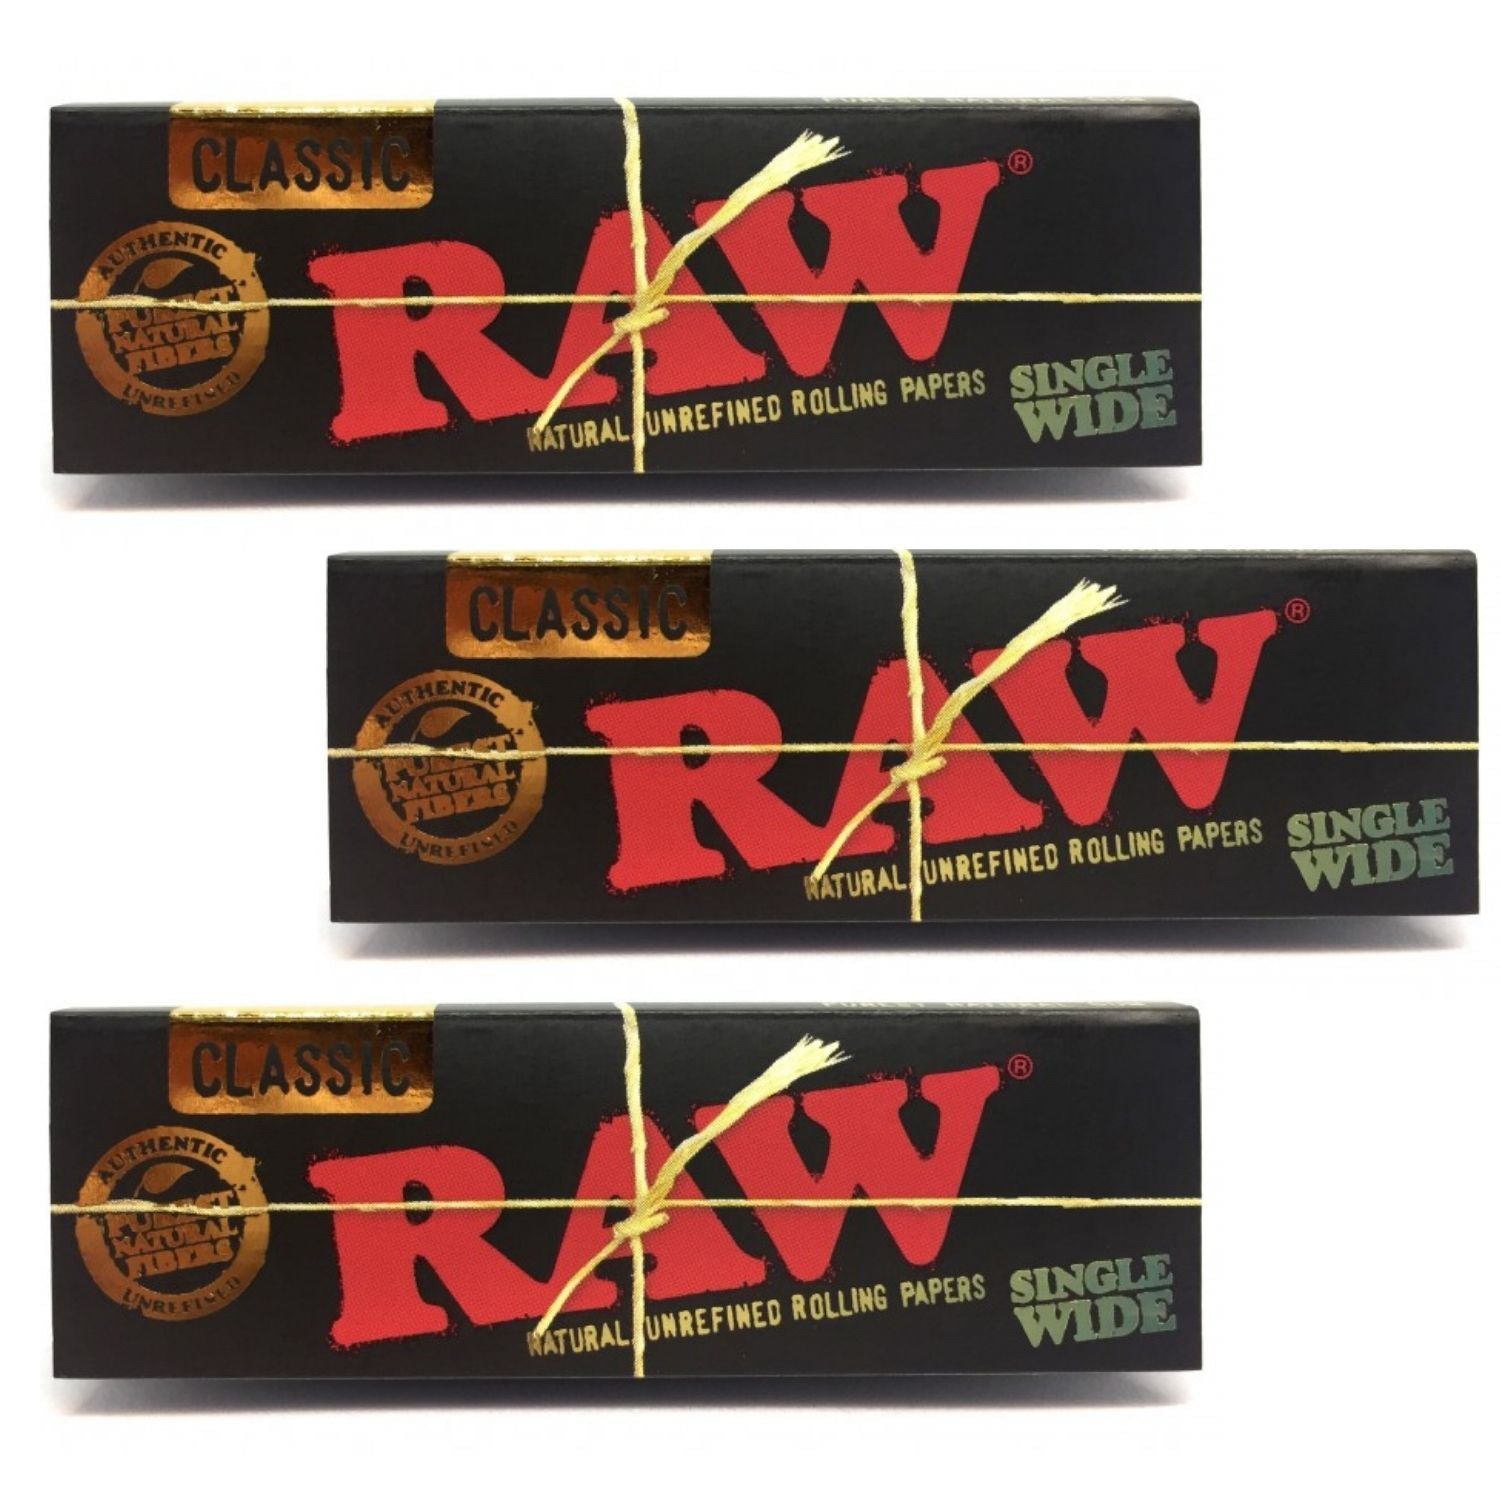 RAW Black Rolling Paper Single Wide - 50 Leaves